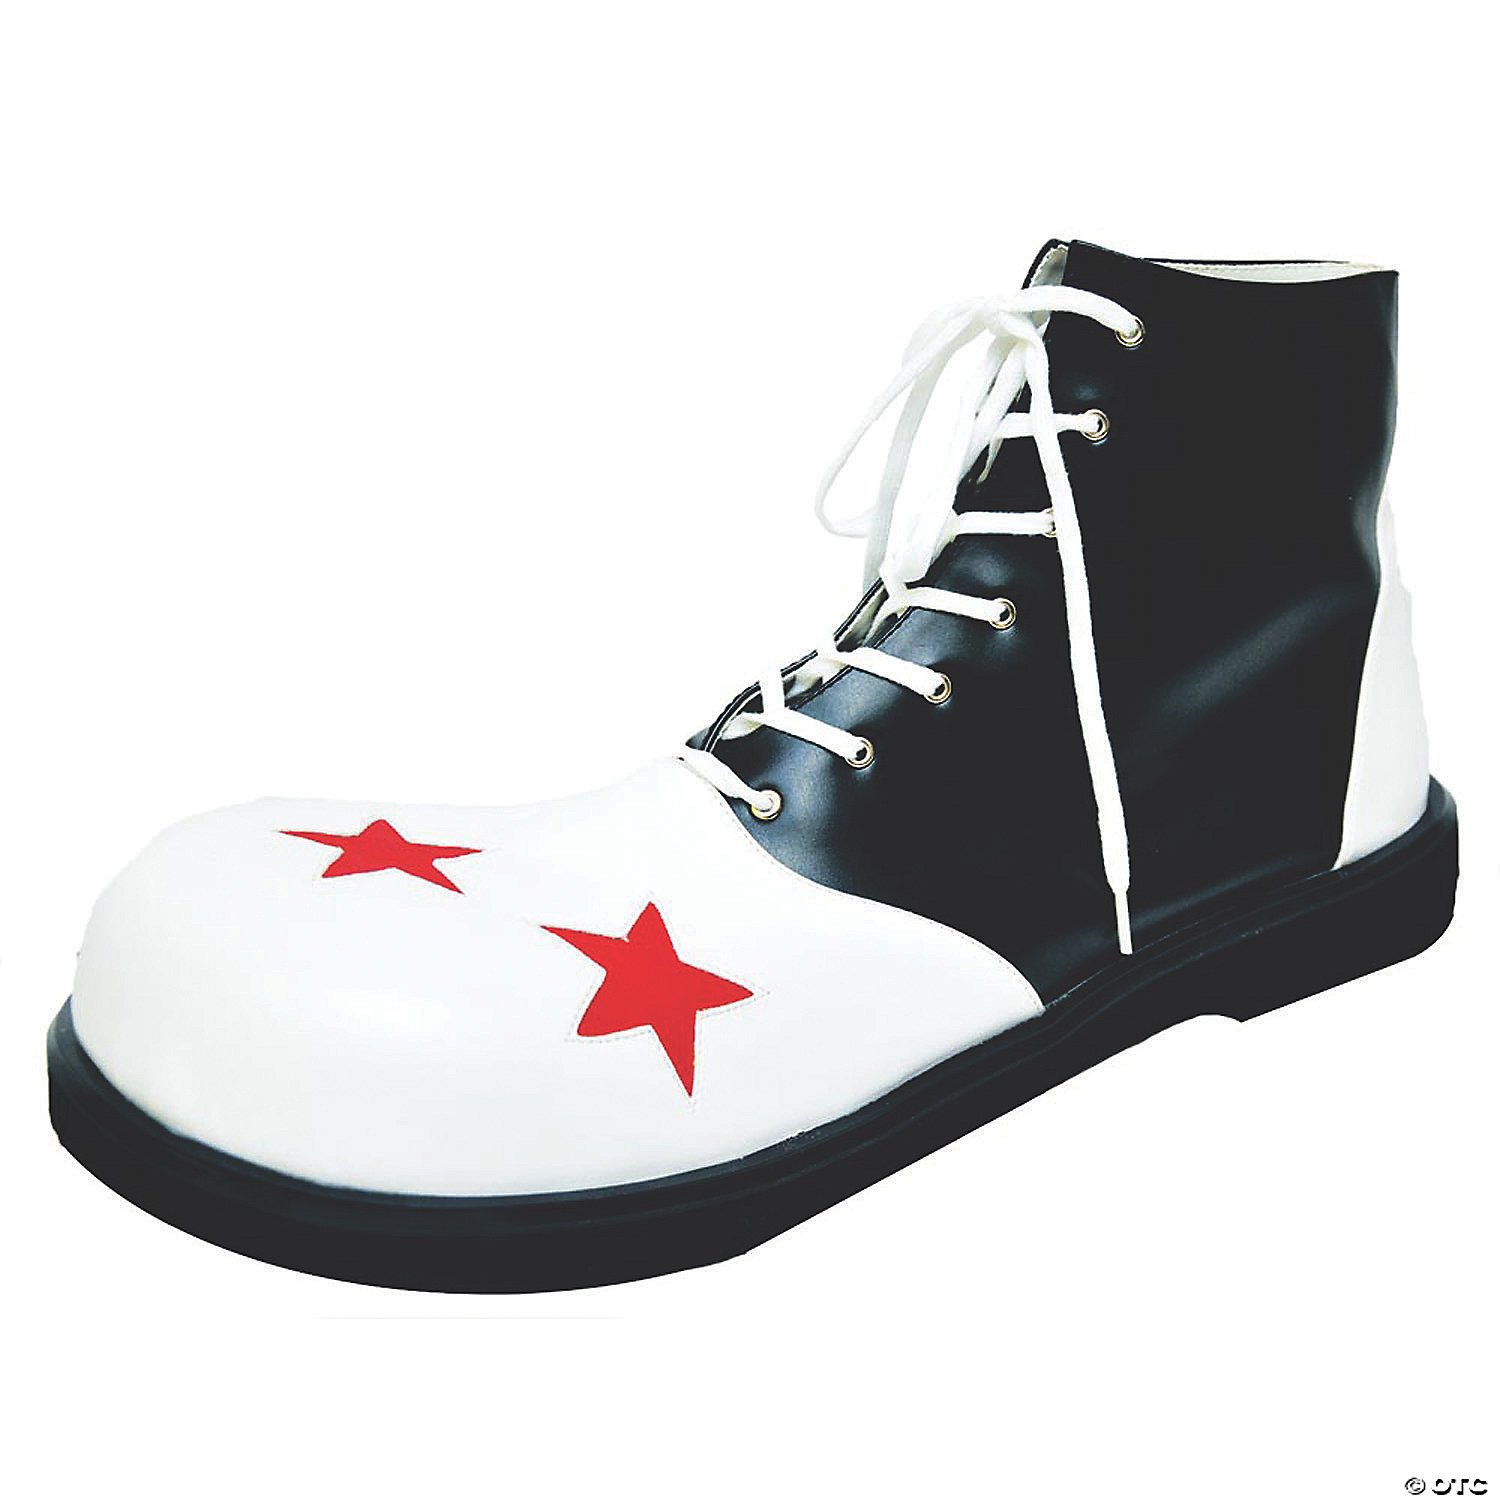 Pleaser Men's Men's Black And White Clown Shoes - Standard